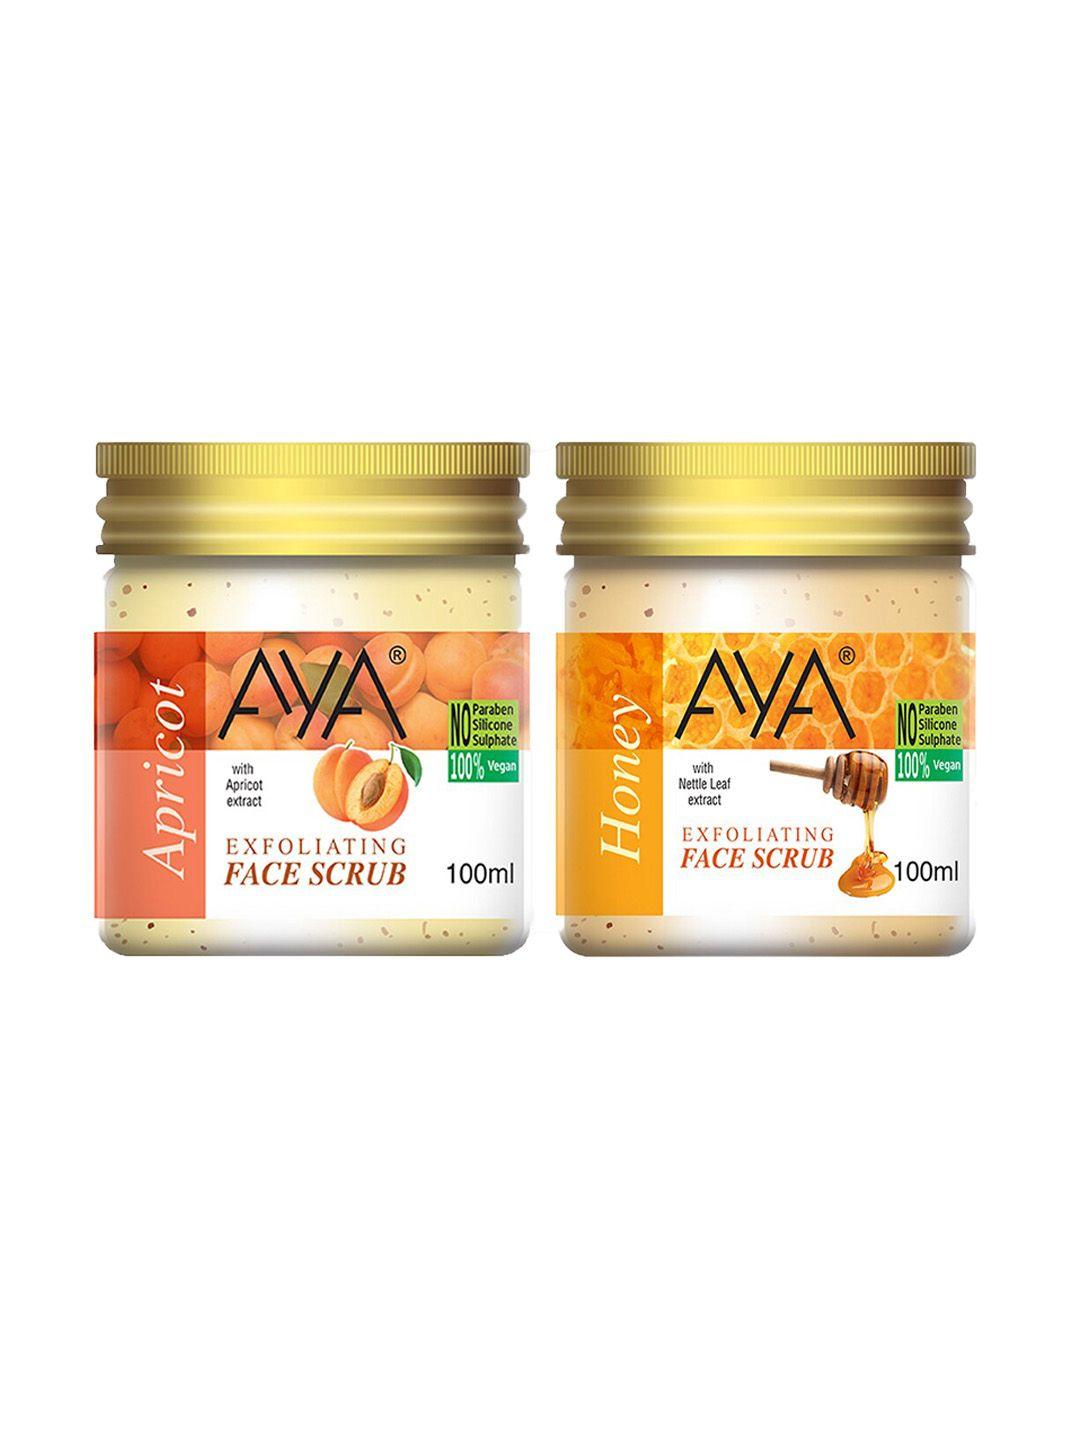 aya set of 2 apricot & honey exfoliating face scrubs - 100 ml each